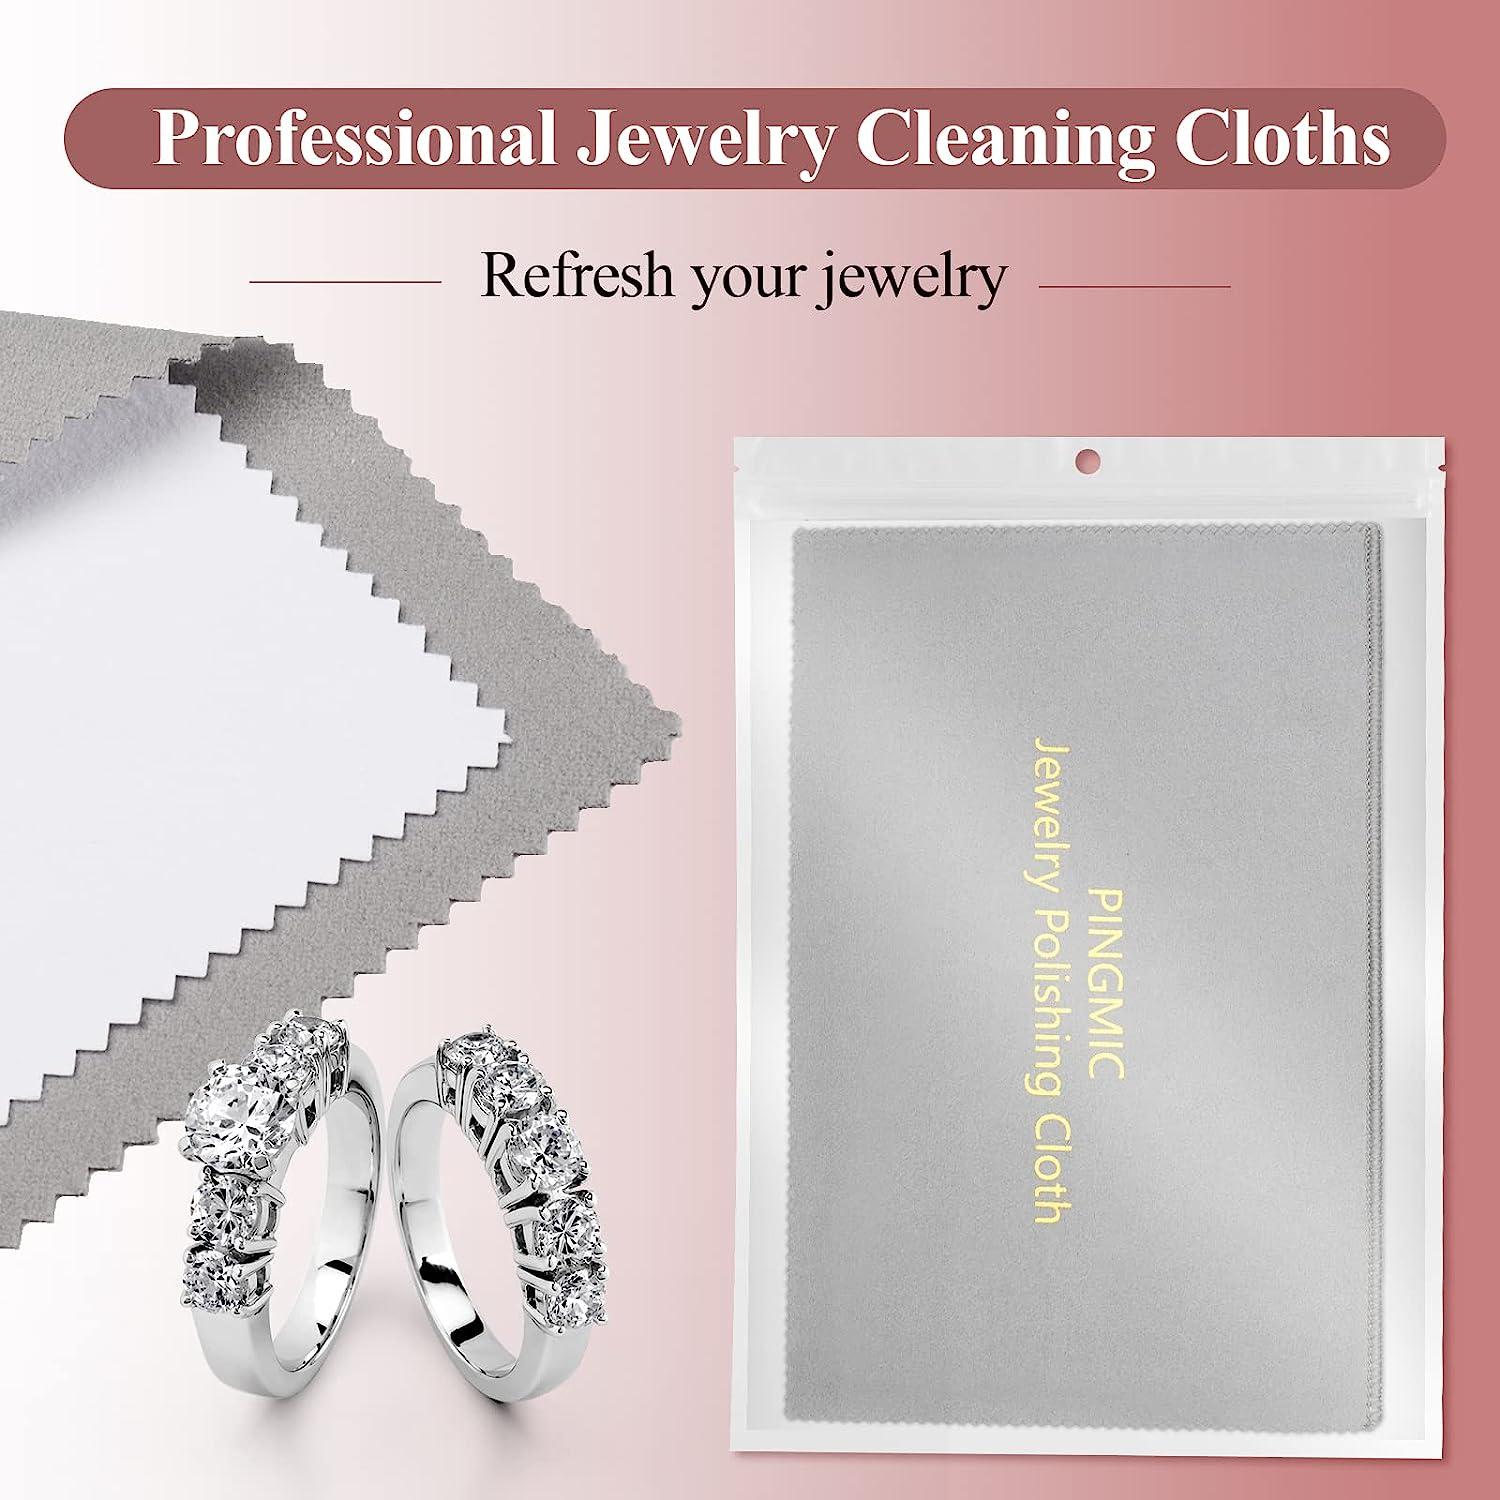 PINGMIC 6 Jewelry Cleaning Cloth, Professional Silver Polishing Cloth for Jewelry Sterling Silver Gold Platinum Copper Diamond, Multi-layer Jewelry